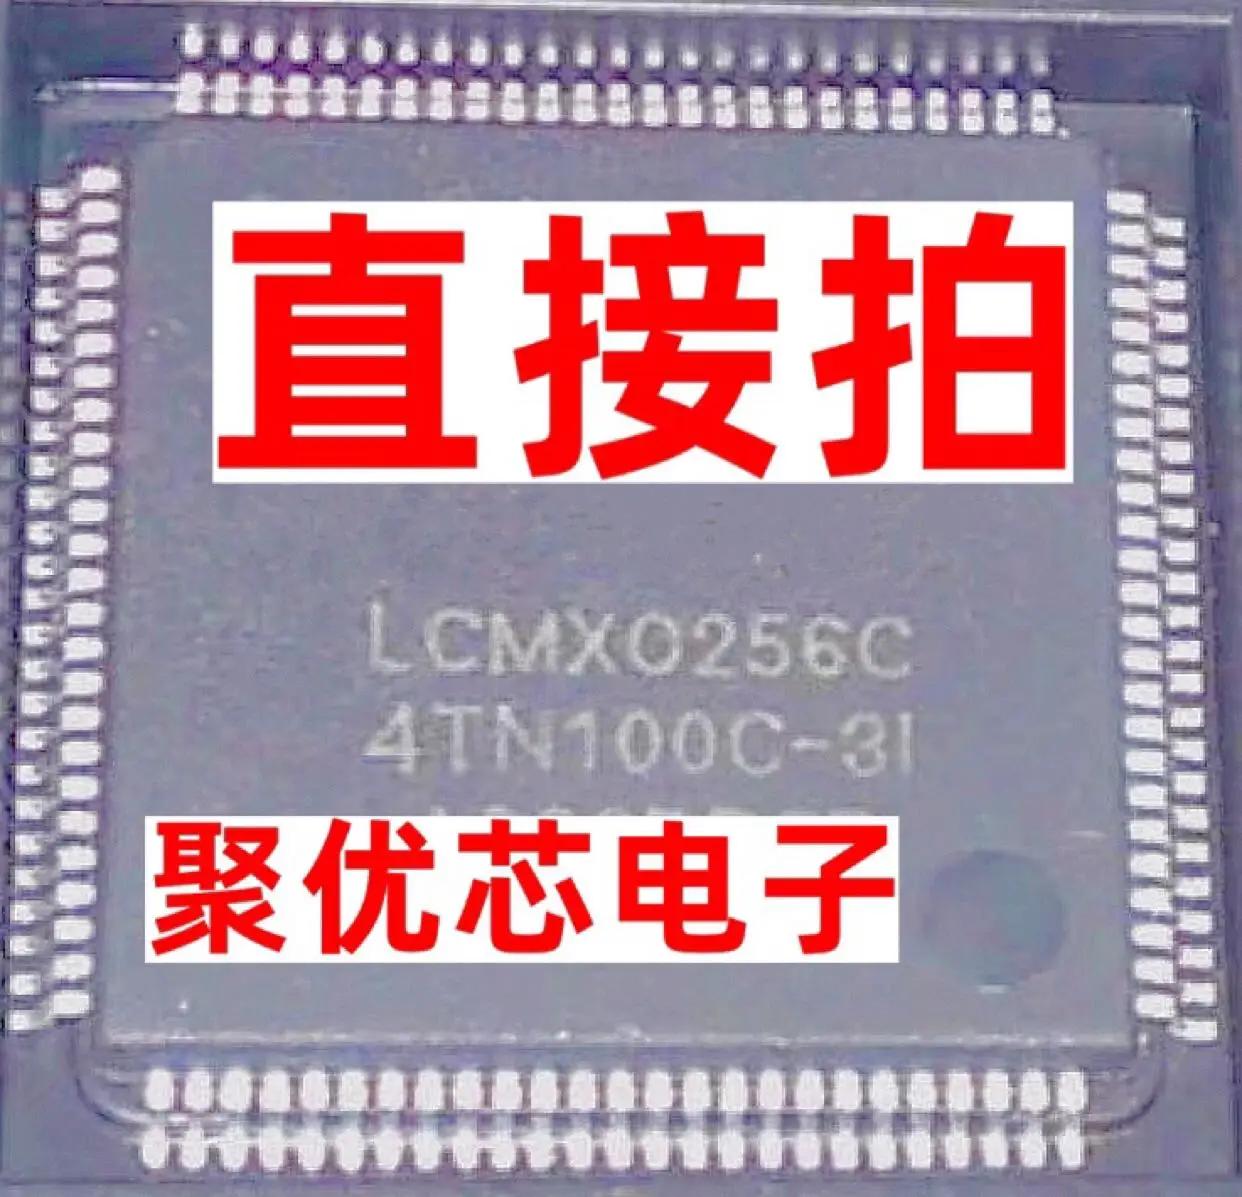 LCMX0256C-3TN100C LCMX0256C 4TN100C-3I QFP